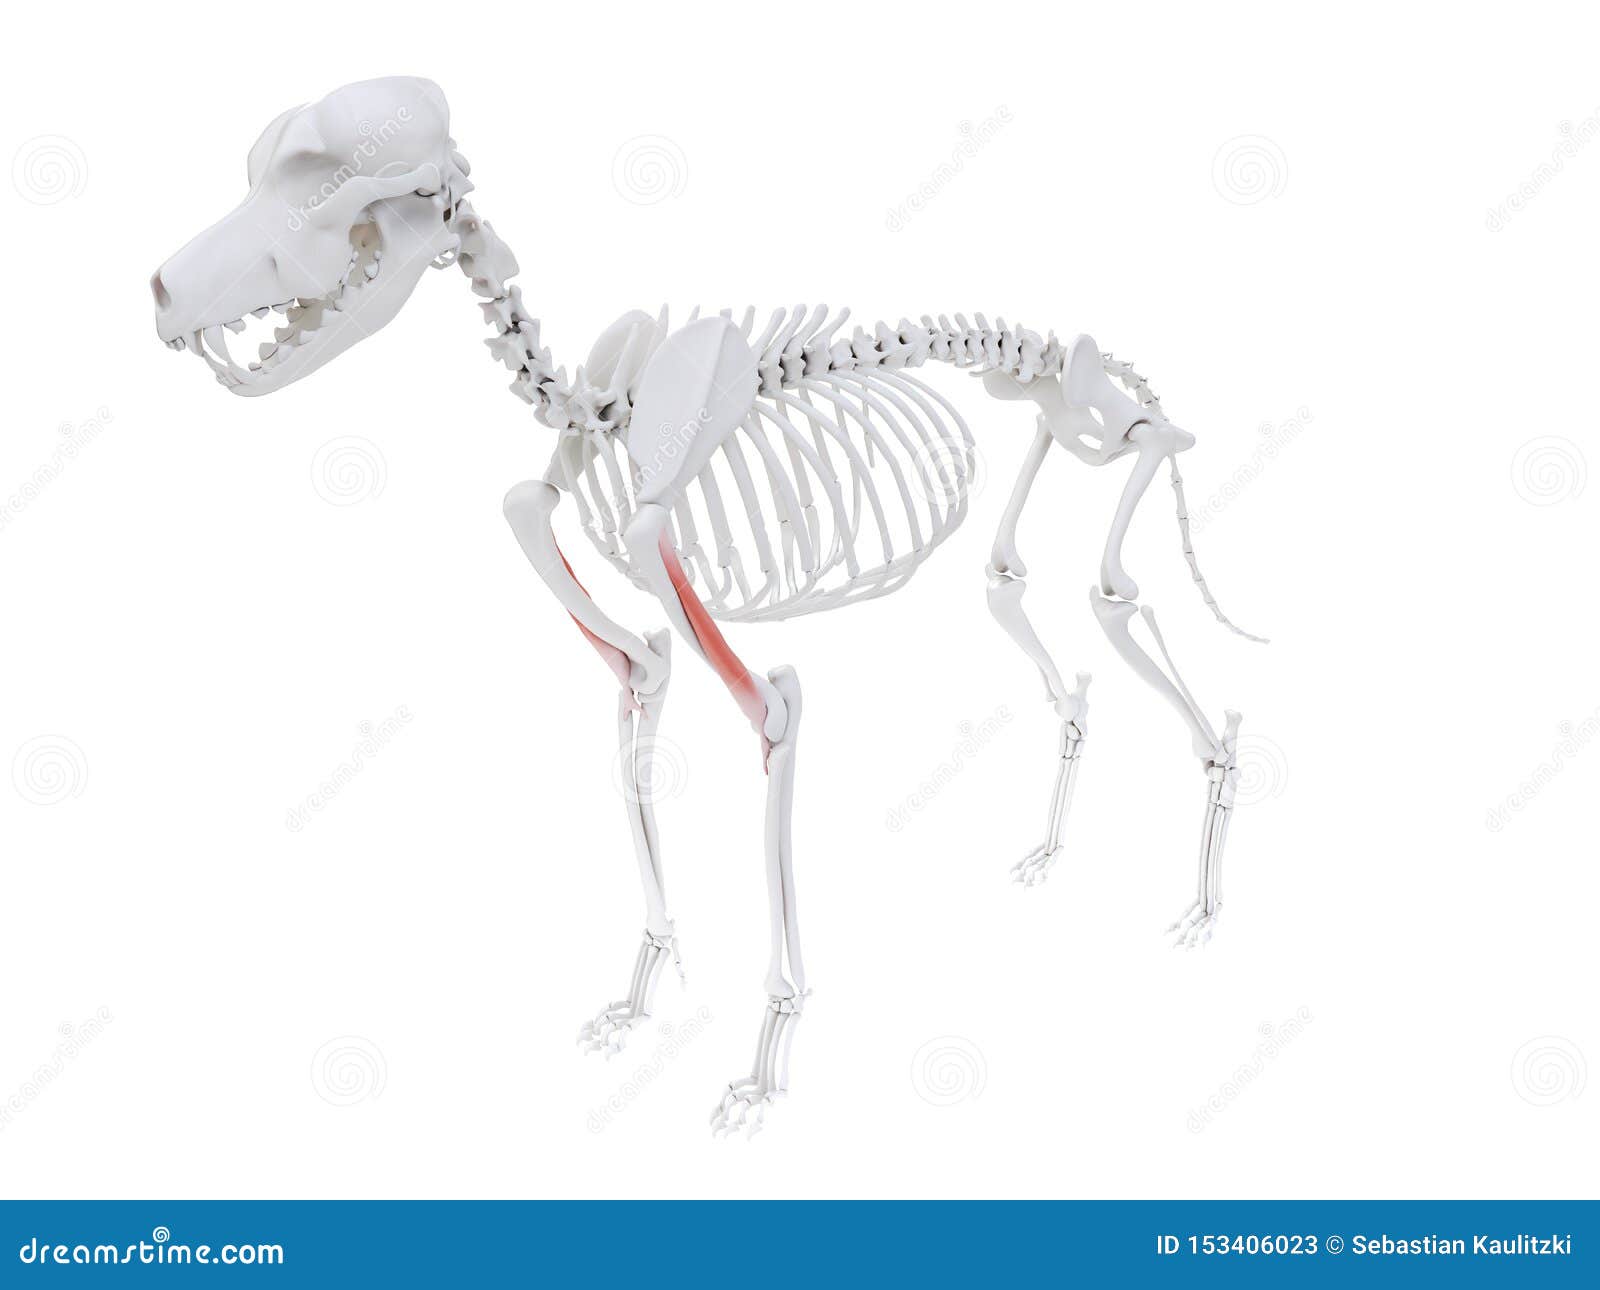 the dog muscle anatomy - brachialis